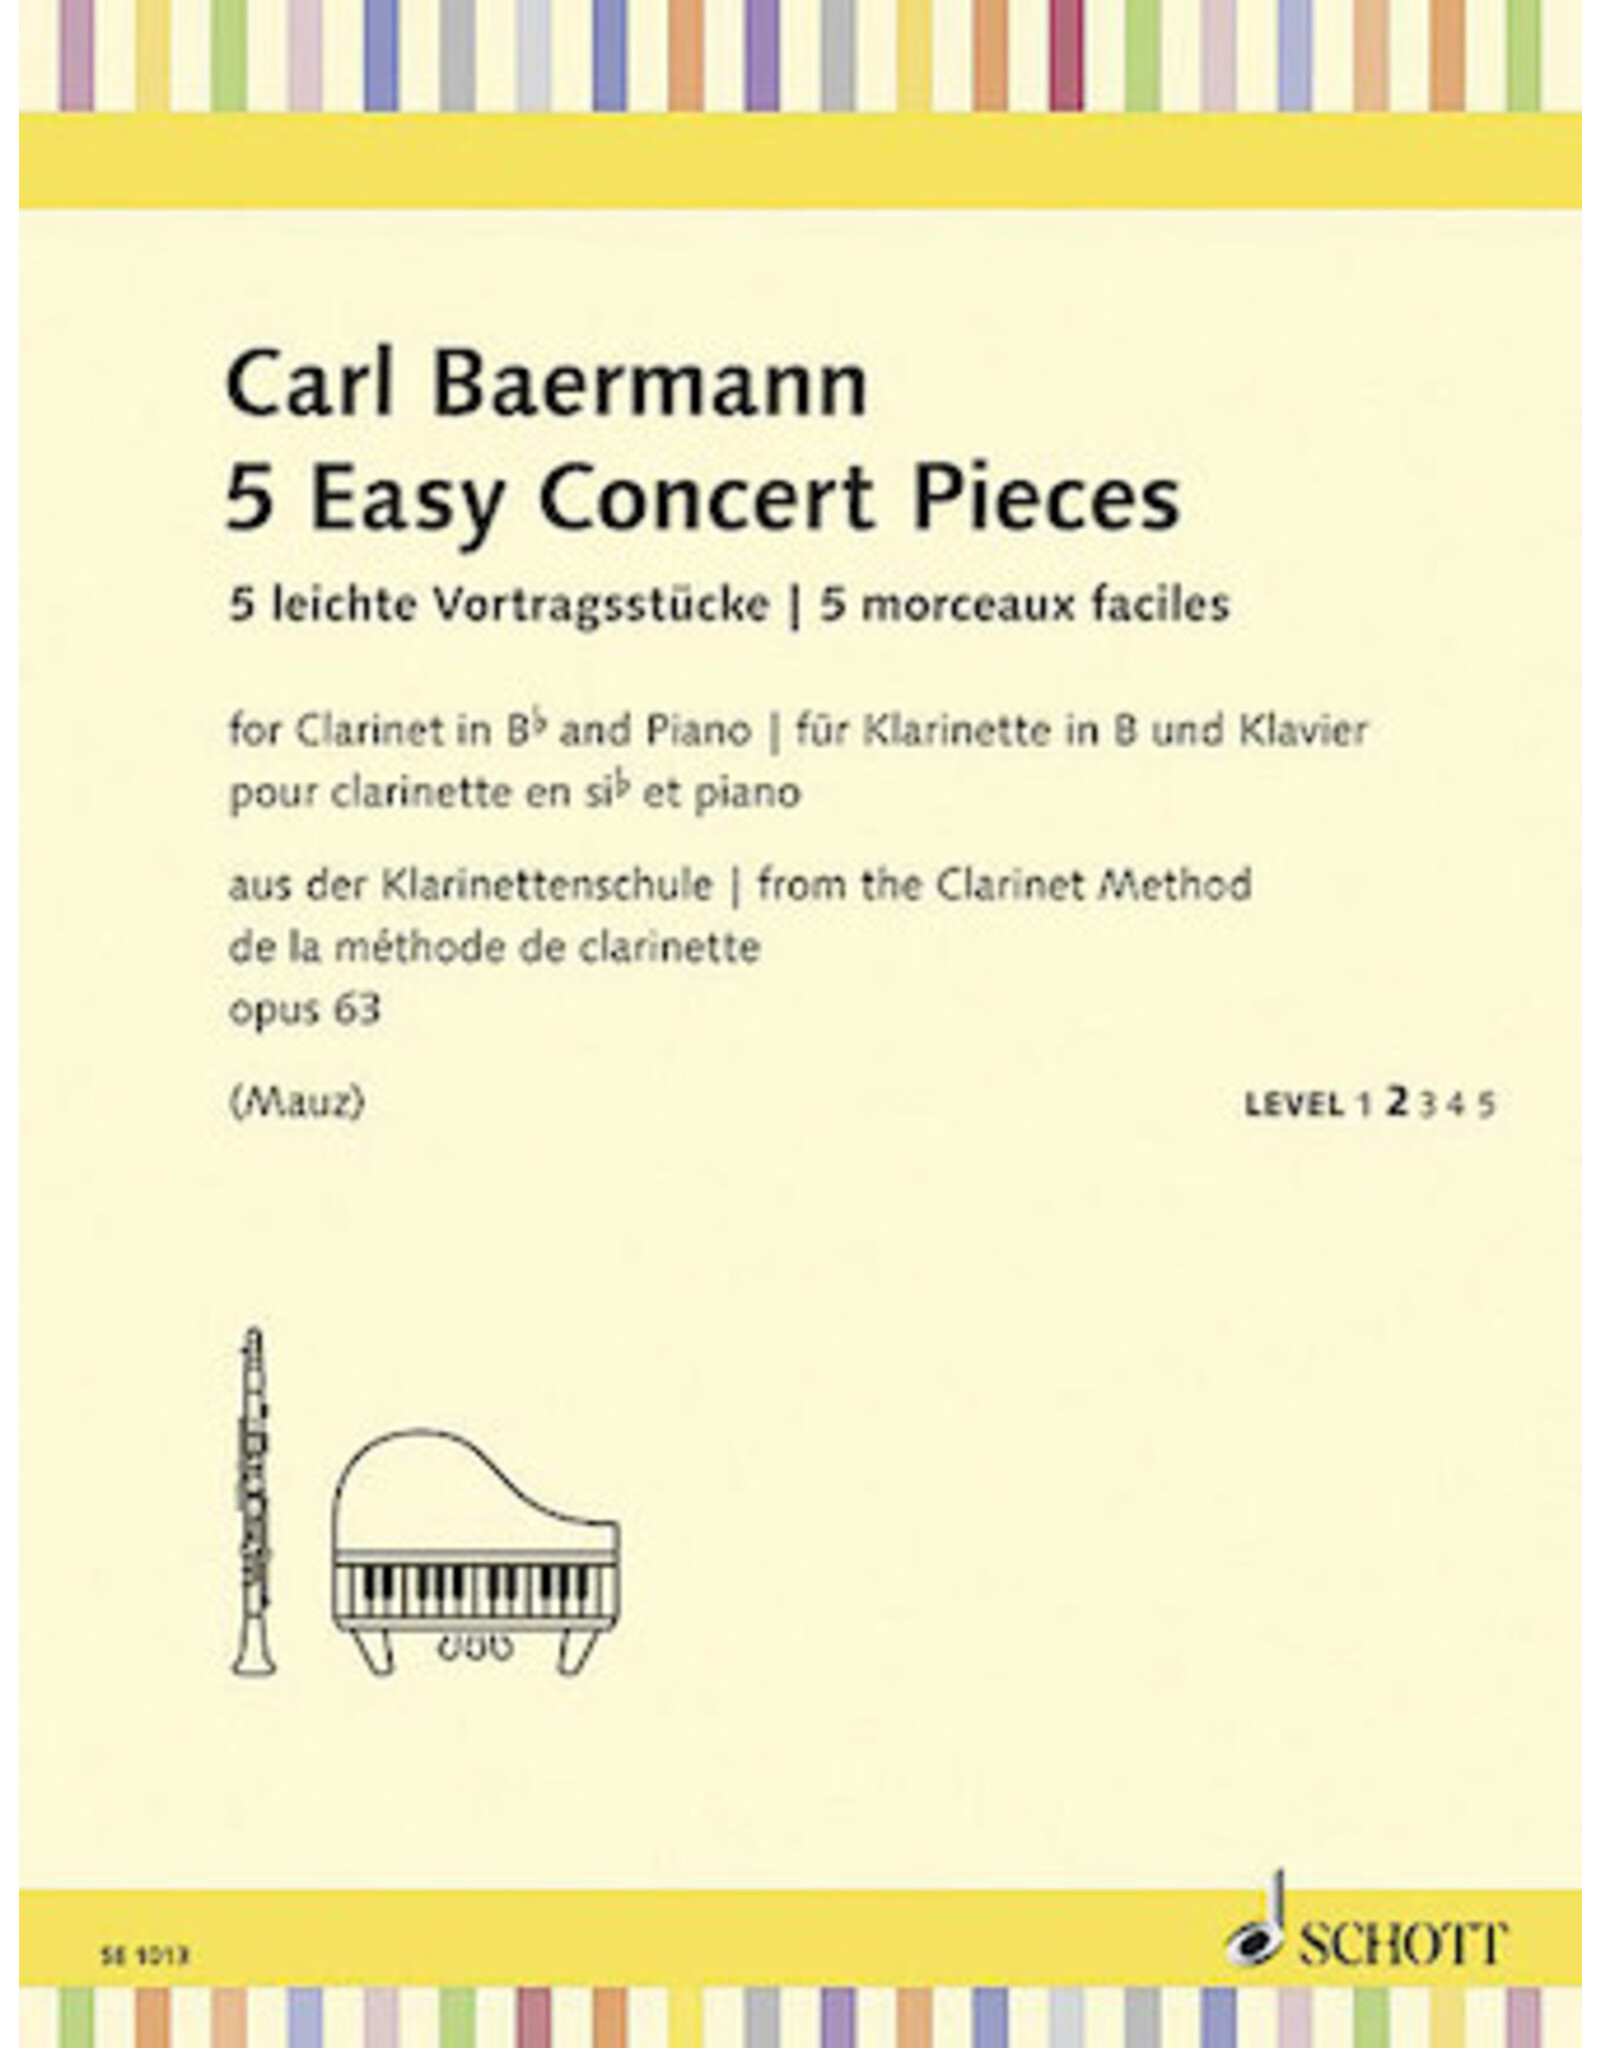 Schott Baermann - 5 Easy Concert Pieces, Op. 63 Clarinet in B-flat and Piano Level 2 Schott Student Edition Reper Softcover (ed. Rudolf Mauz) Schott Student Edition Repertoire